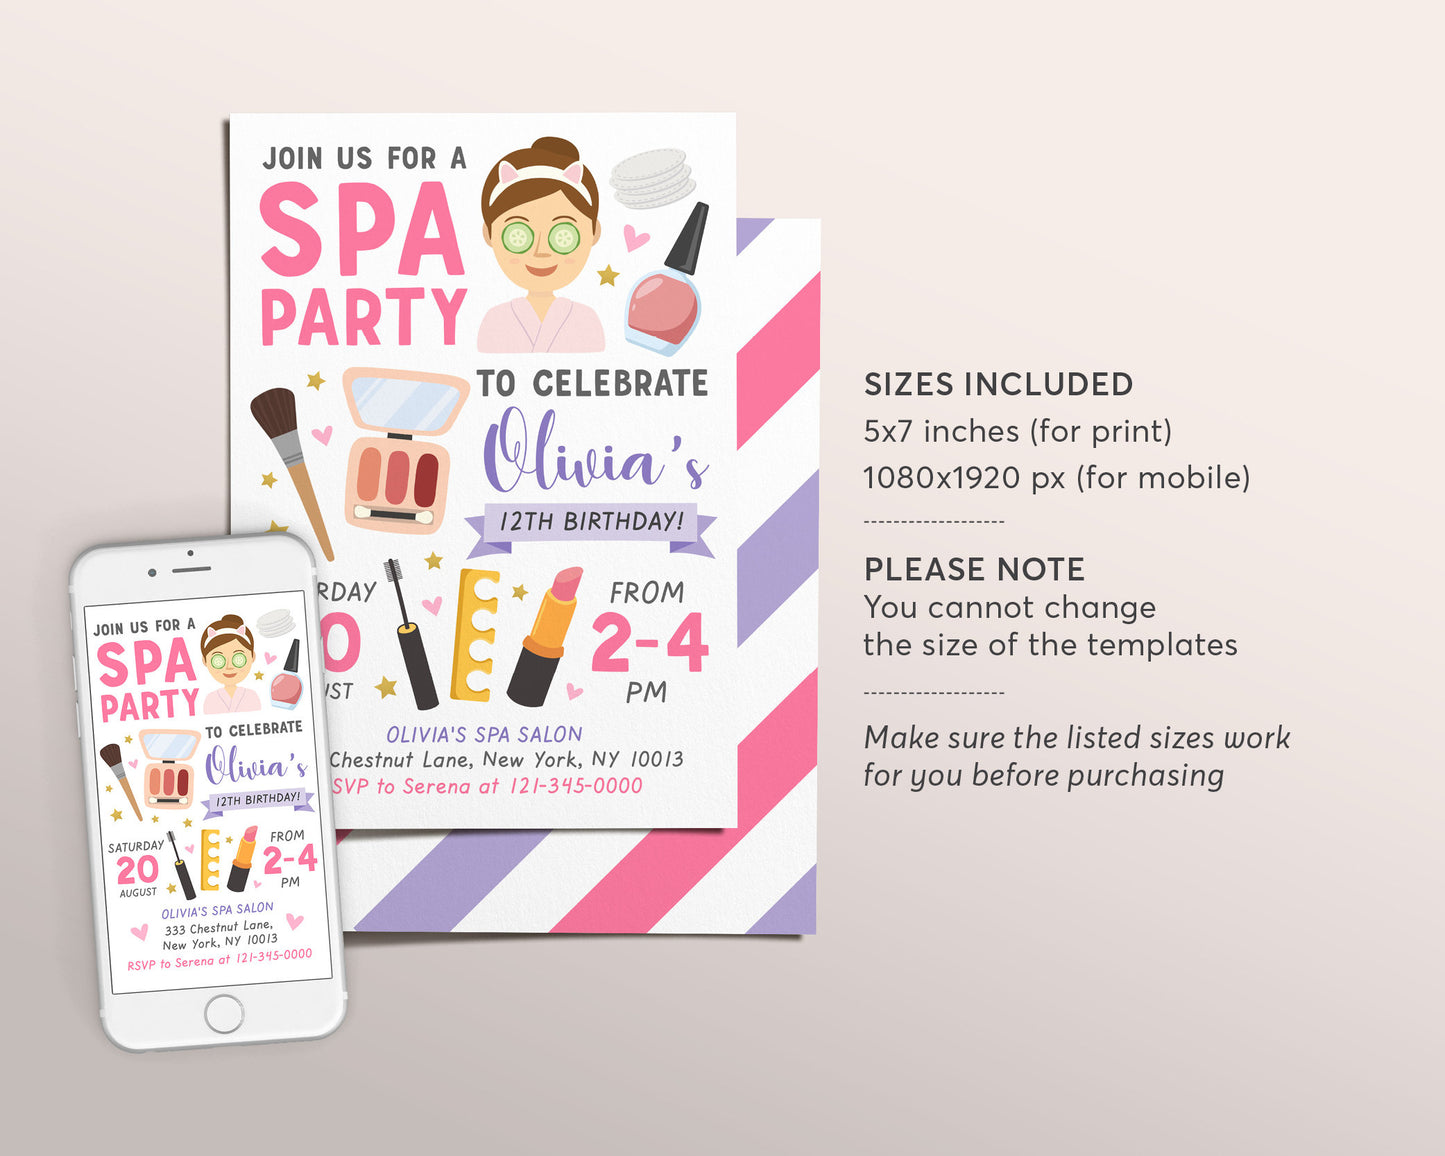 Spa Party Invitation Editable Template, Makeup Party Facial Mani Pedi Girls Spa Day Glam Makeup Nail Salon Birthday Invite, Tween Printable